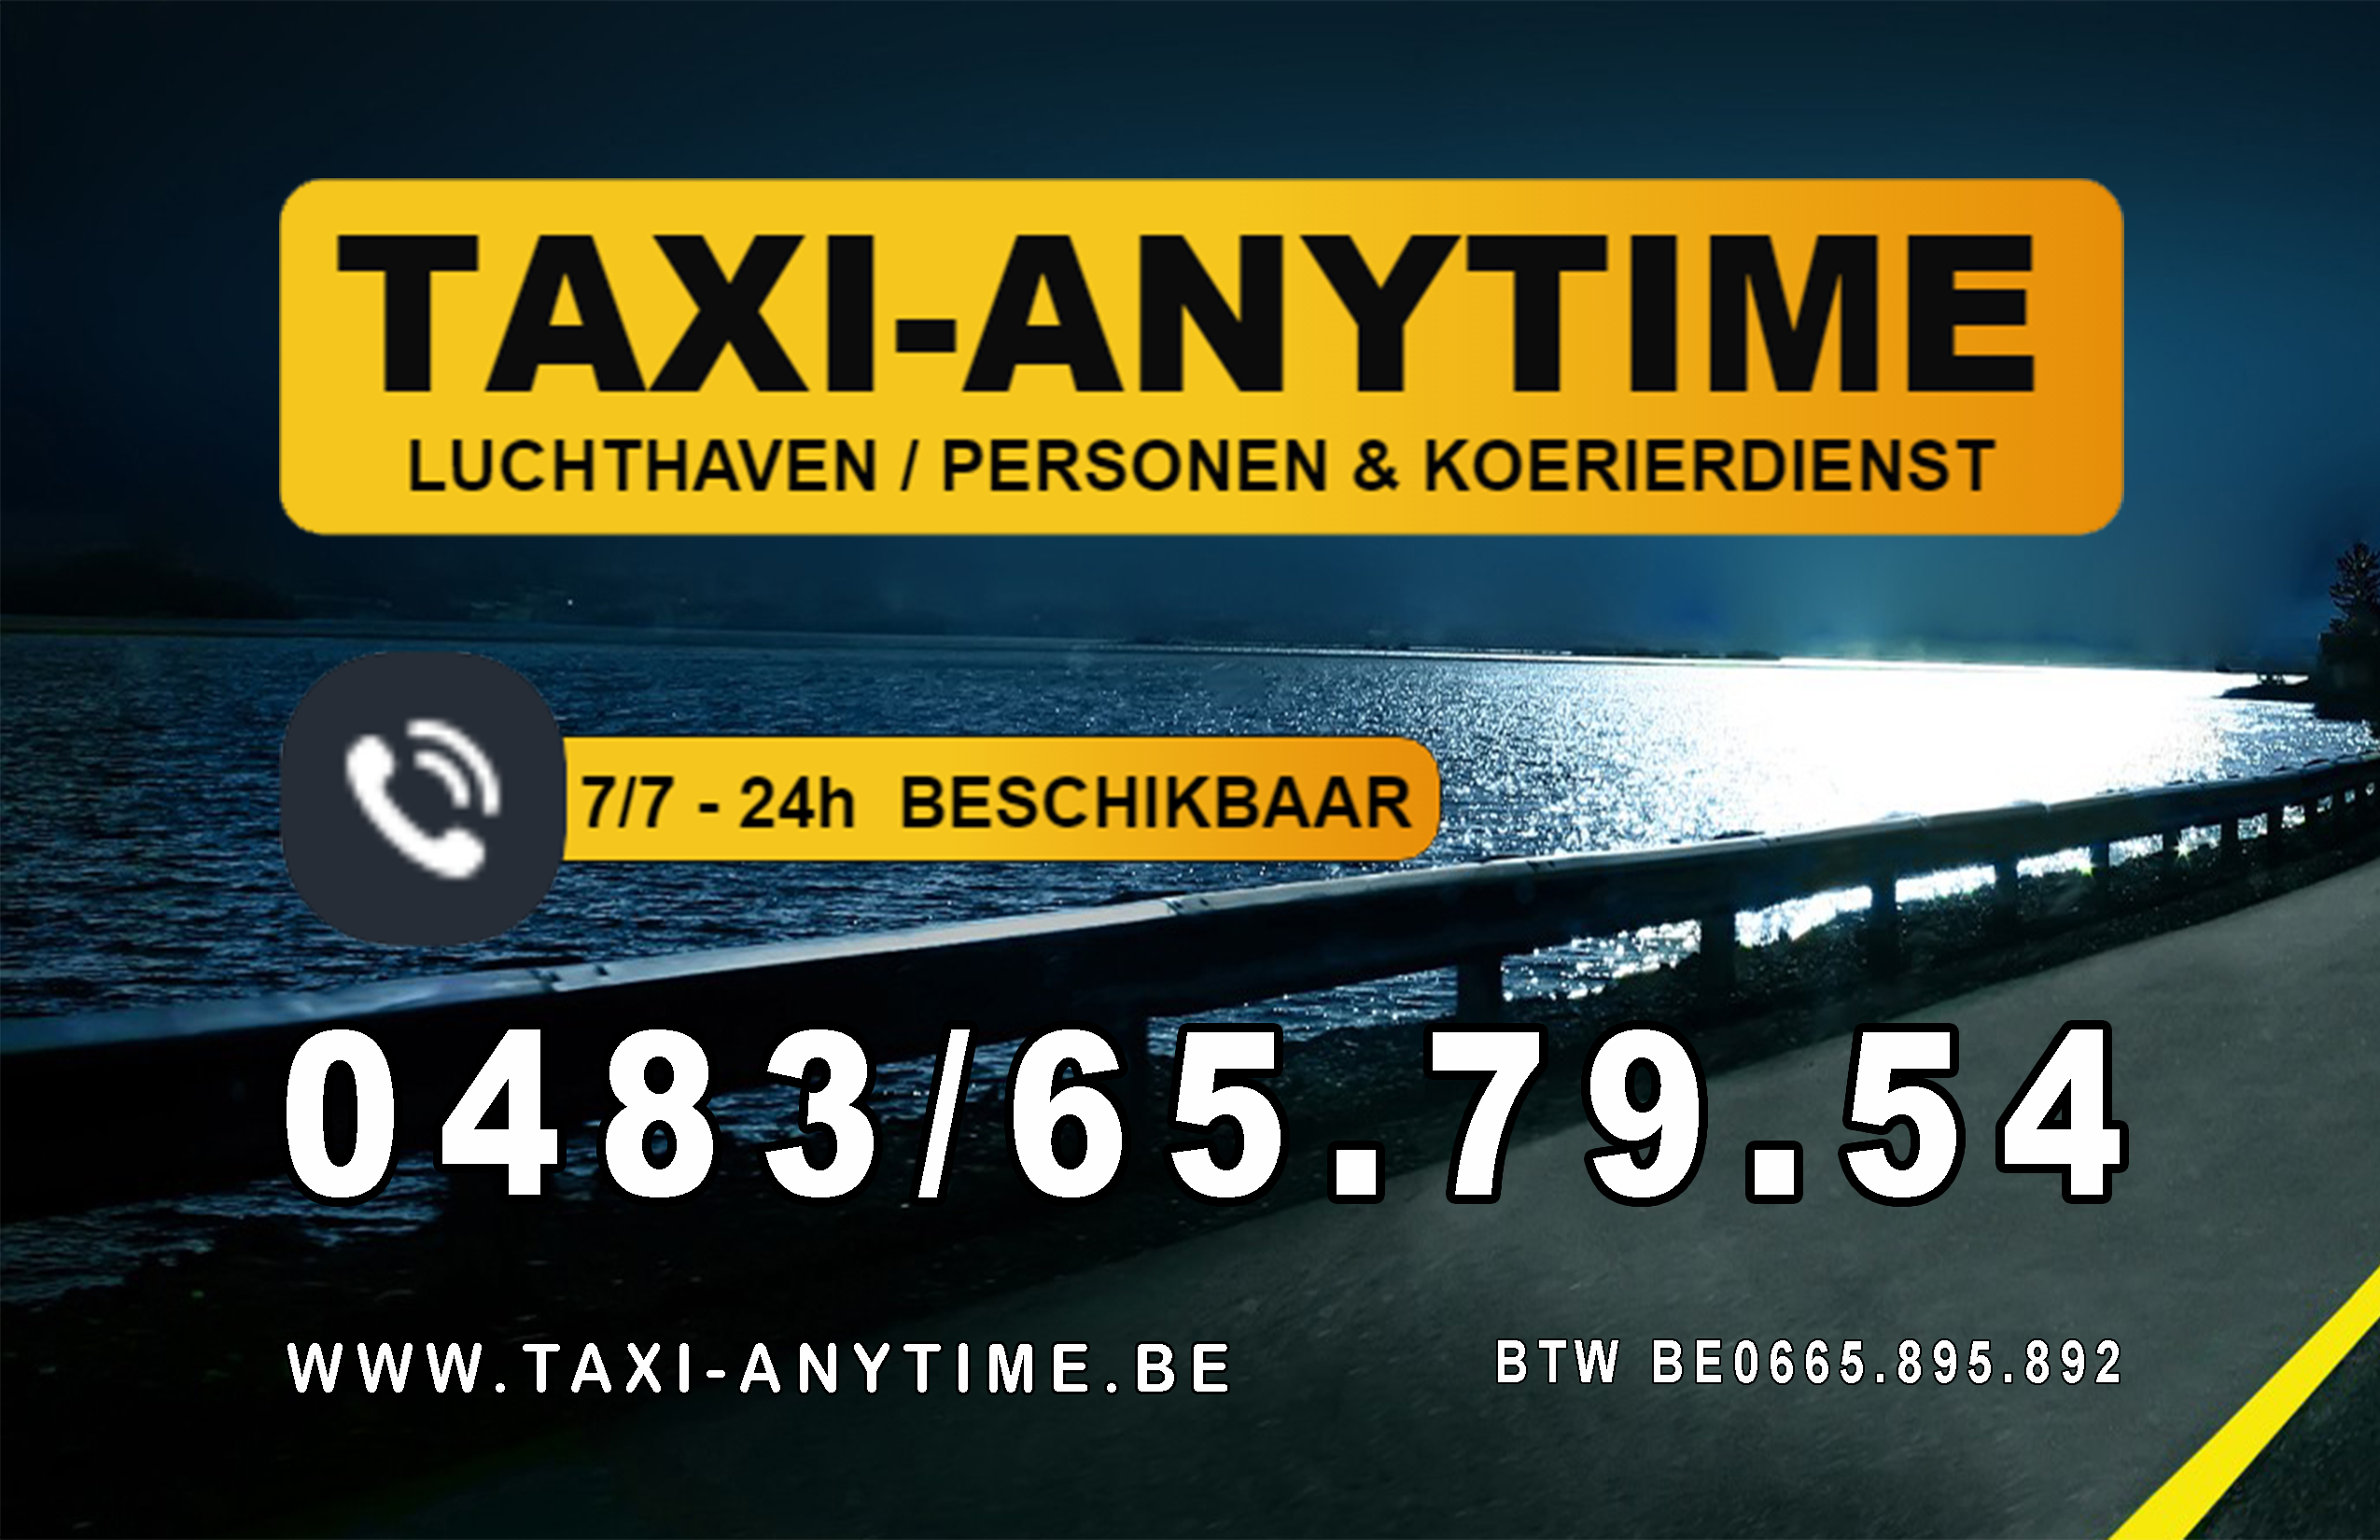 taxibedrijven met luchthavenvervoer Gent Taxi-anytime